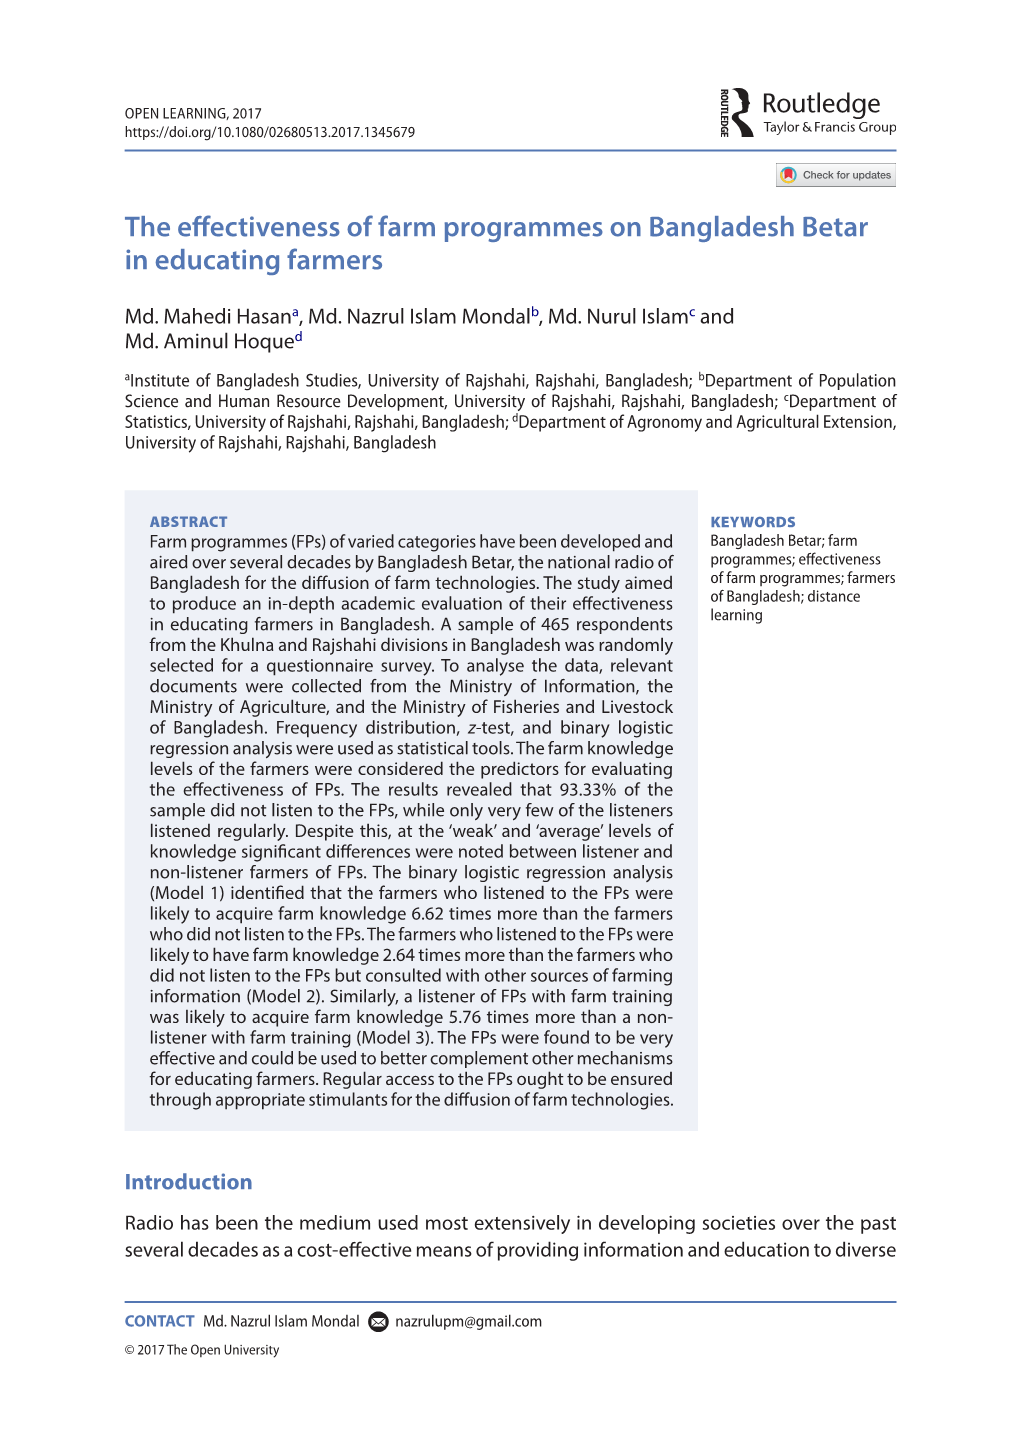 The Effectiveness of Farm Programmes on Bangladesh Betar in Educating Farmers